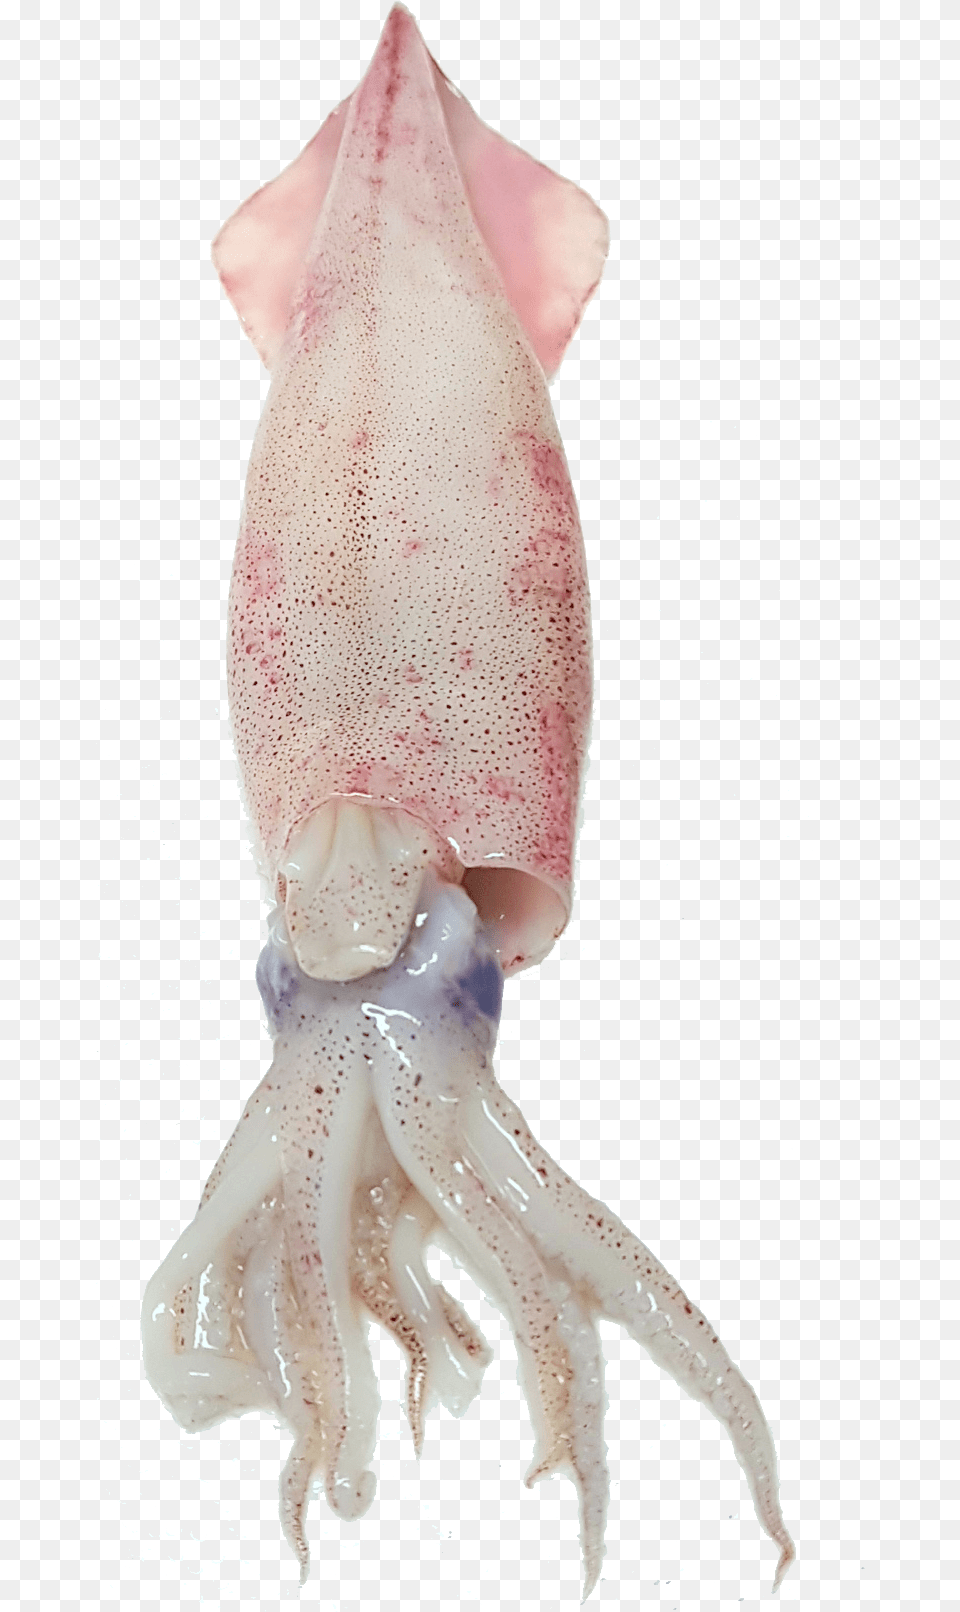 Squid Image Squid, Animal, Food, Sea Life, Seafood Free Transparent Png